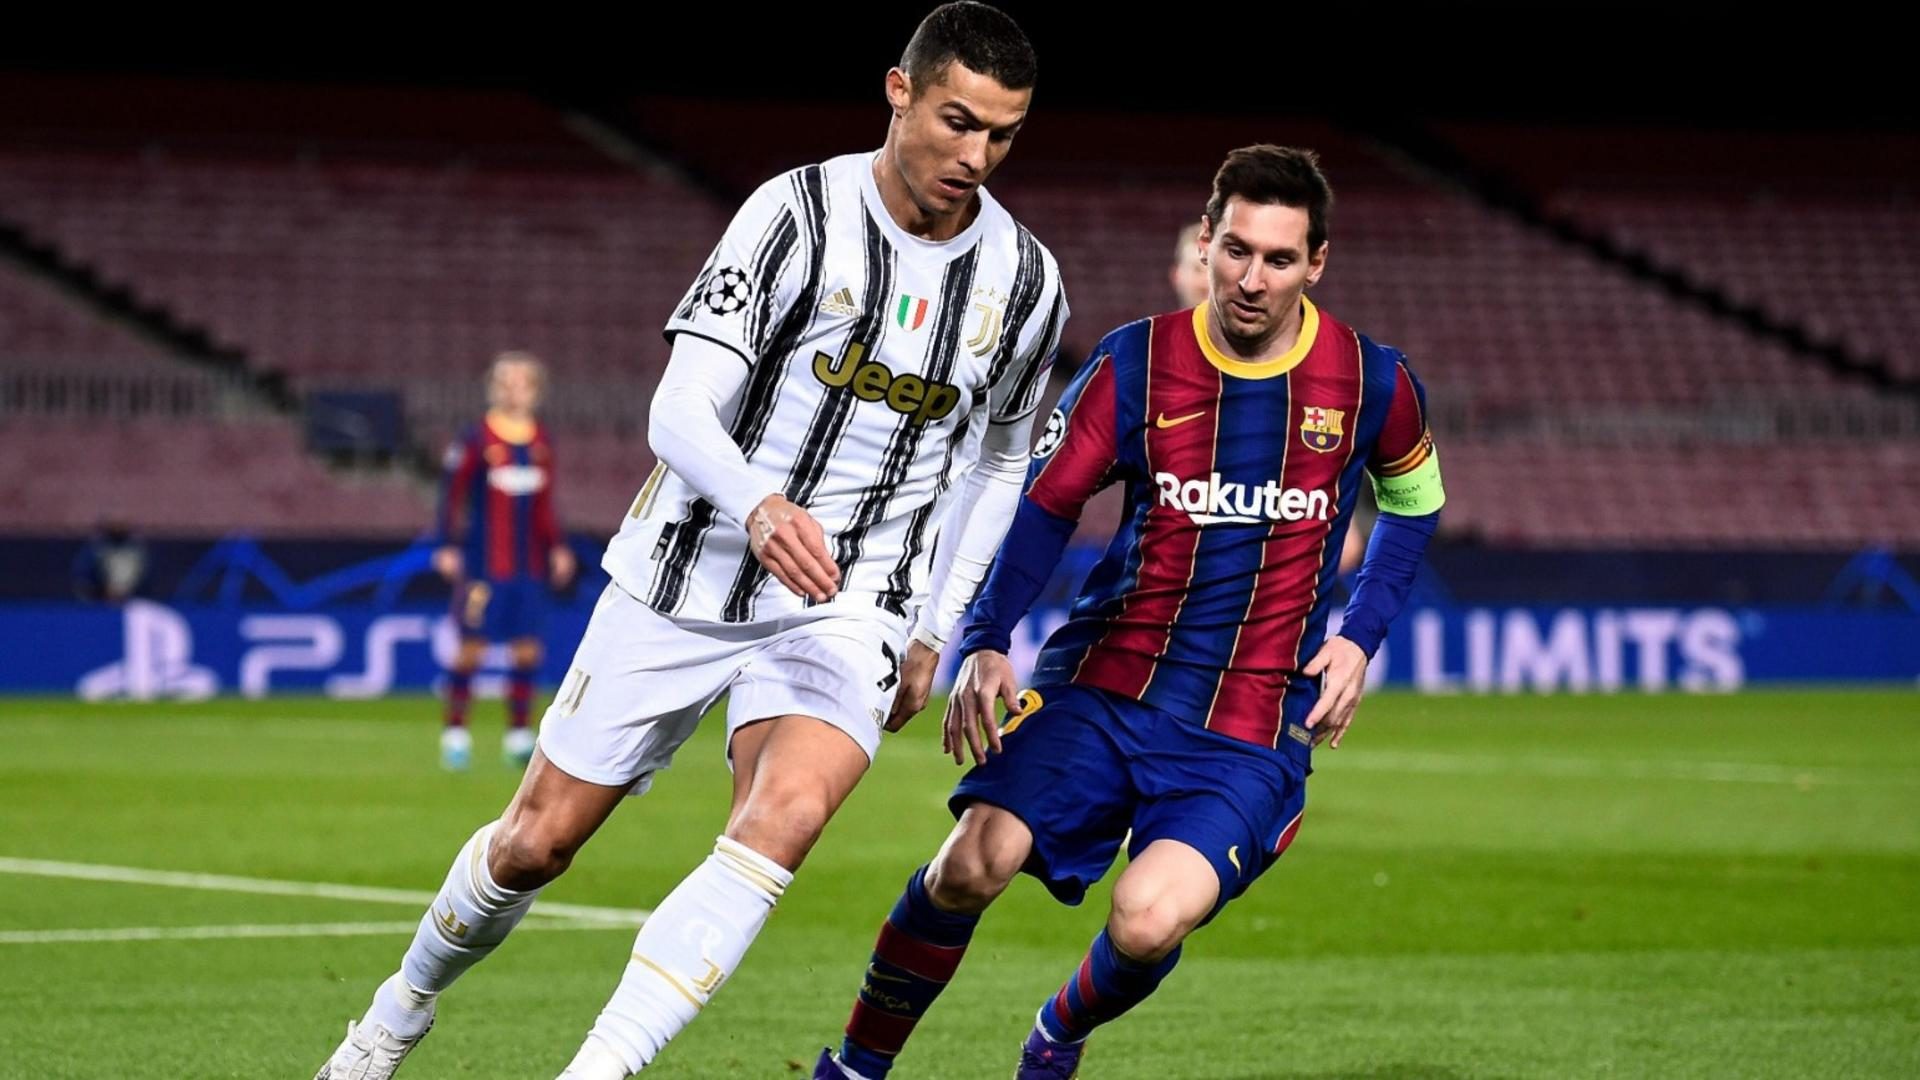 Riyadh Season Team vs PSG: Cristiano Ronaldo, Lionel Messi might face off -  watch live streaming in India